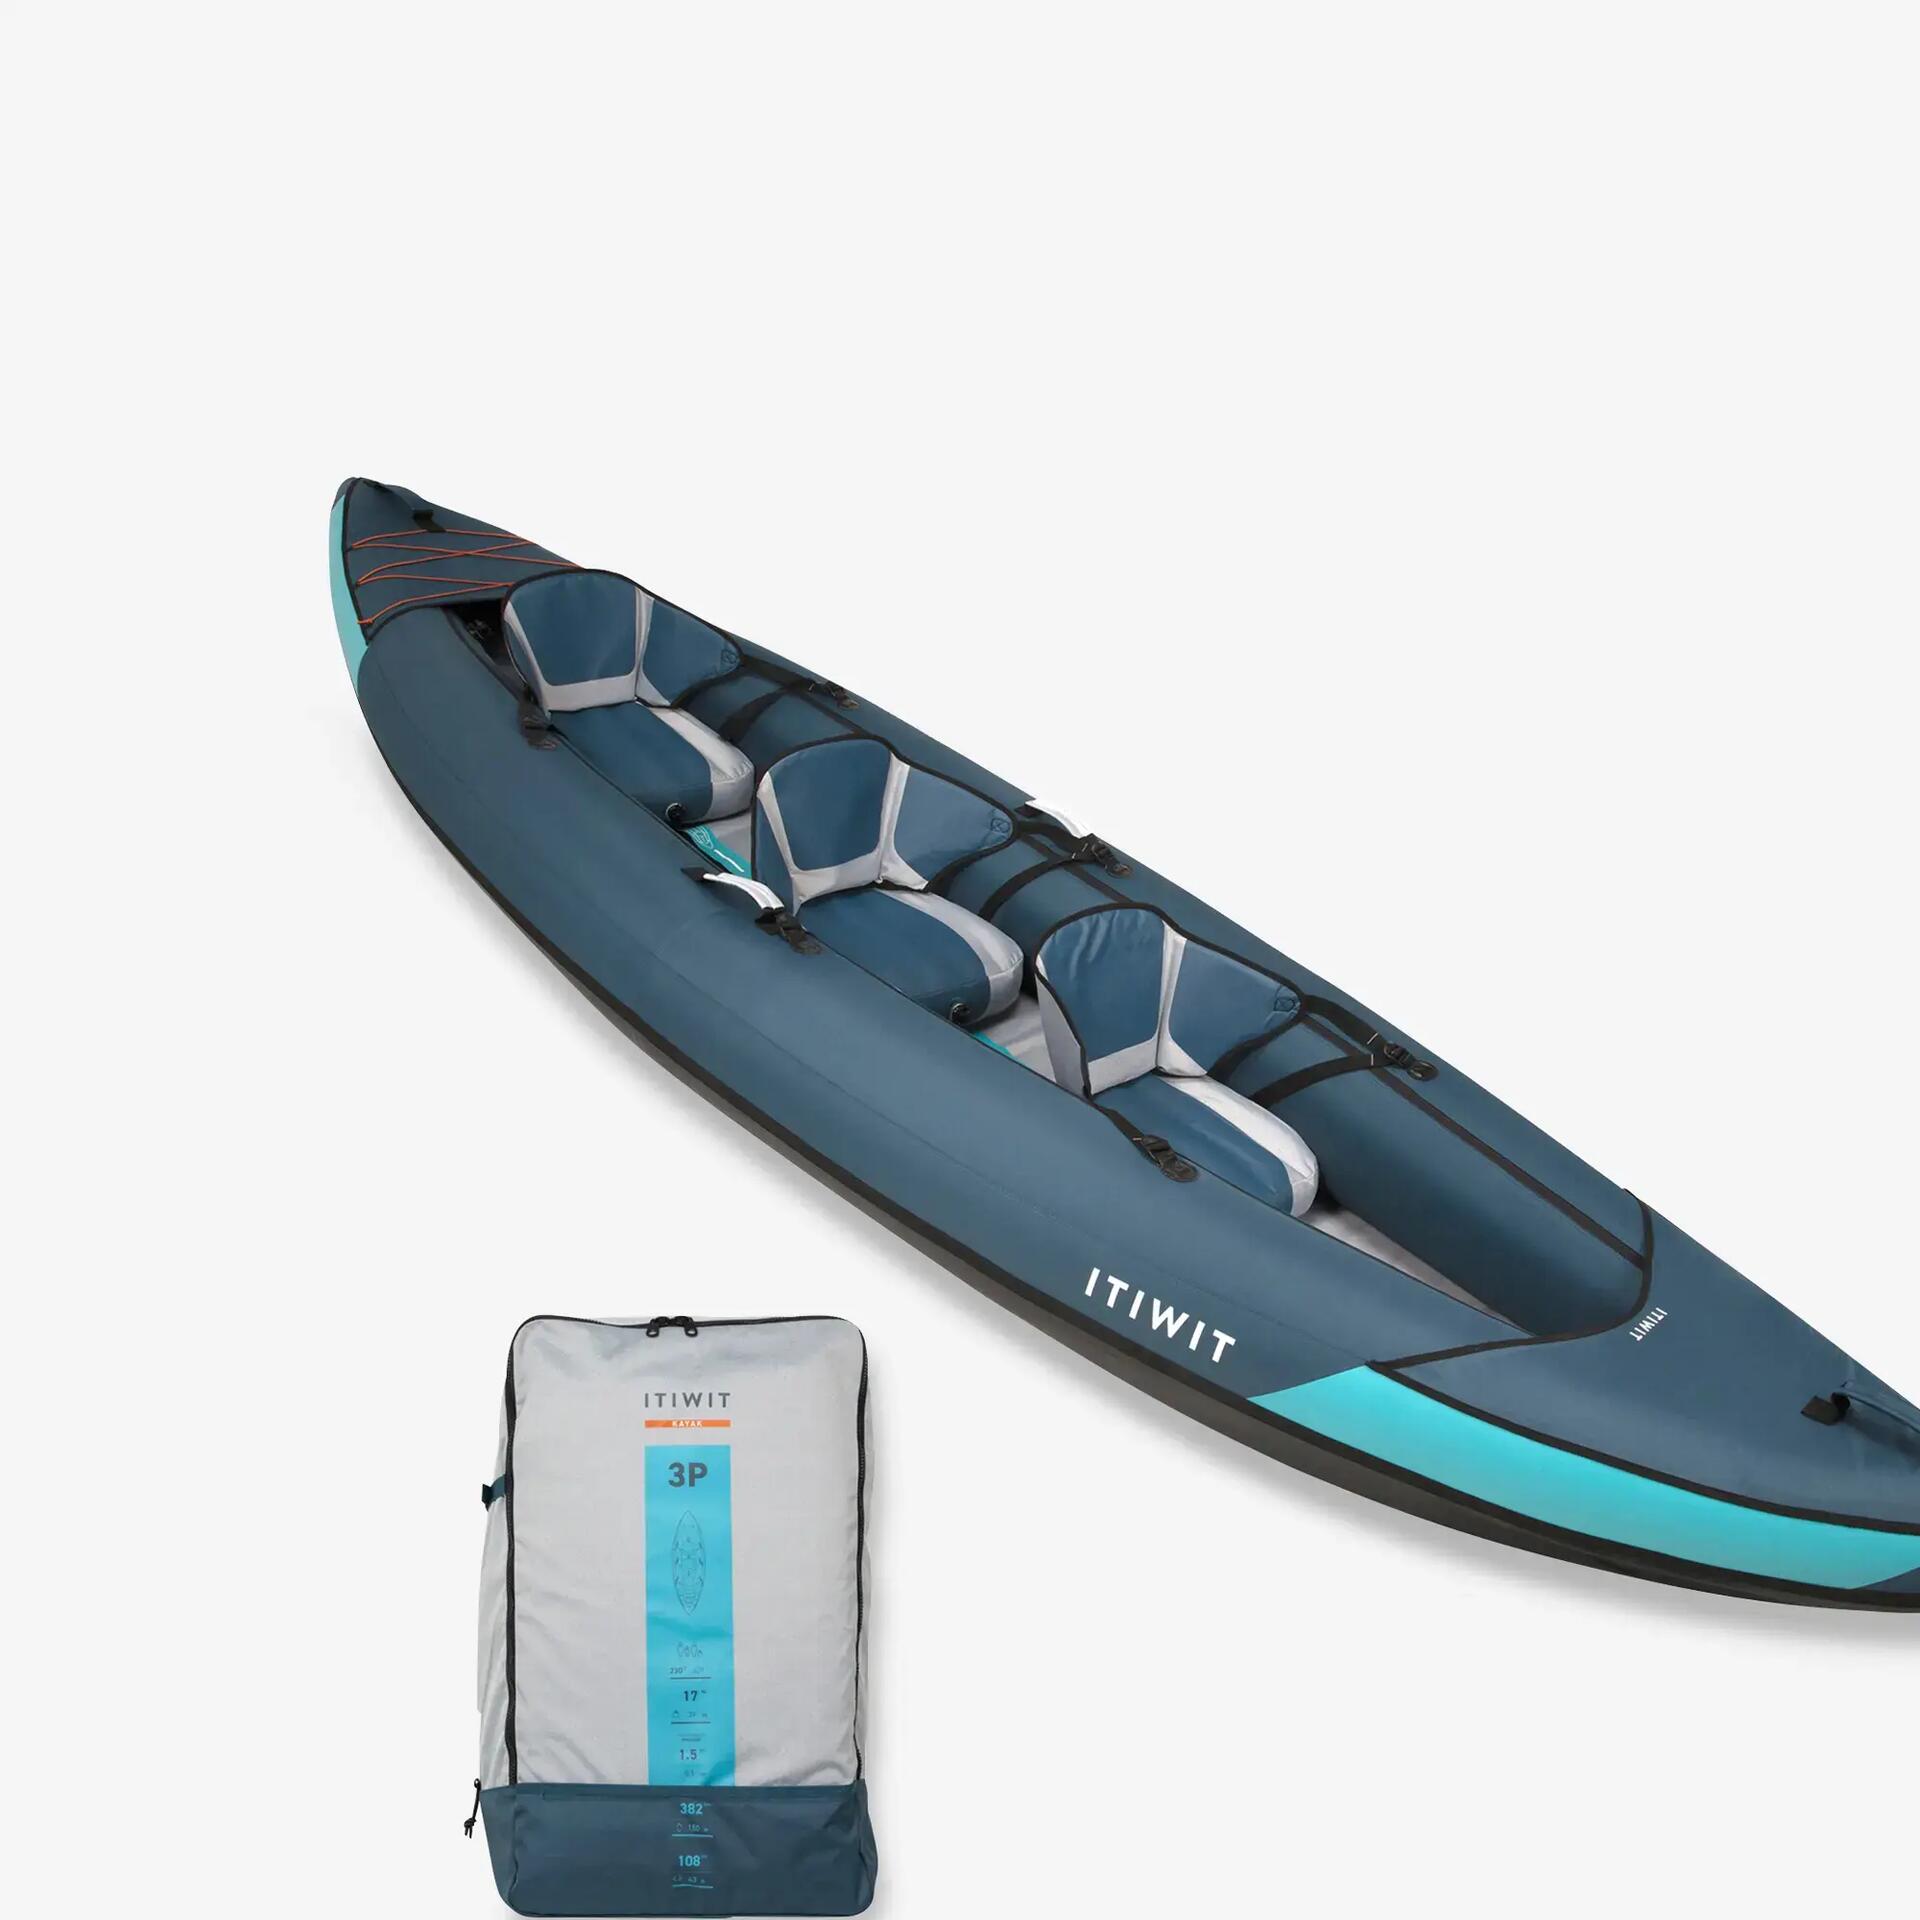 decathlon-itiwit-inflatable-kayak-three-seater-orange